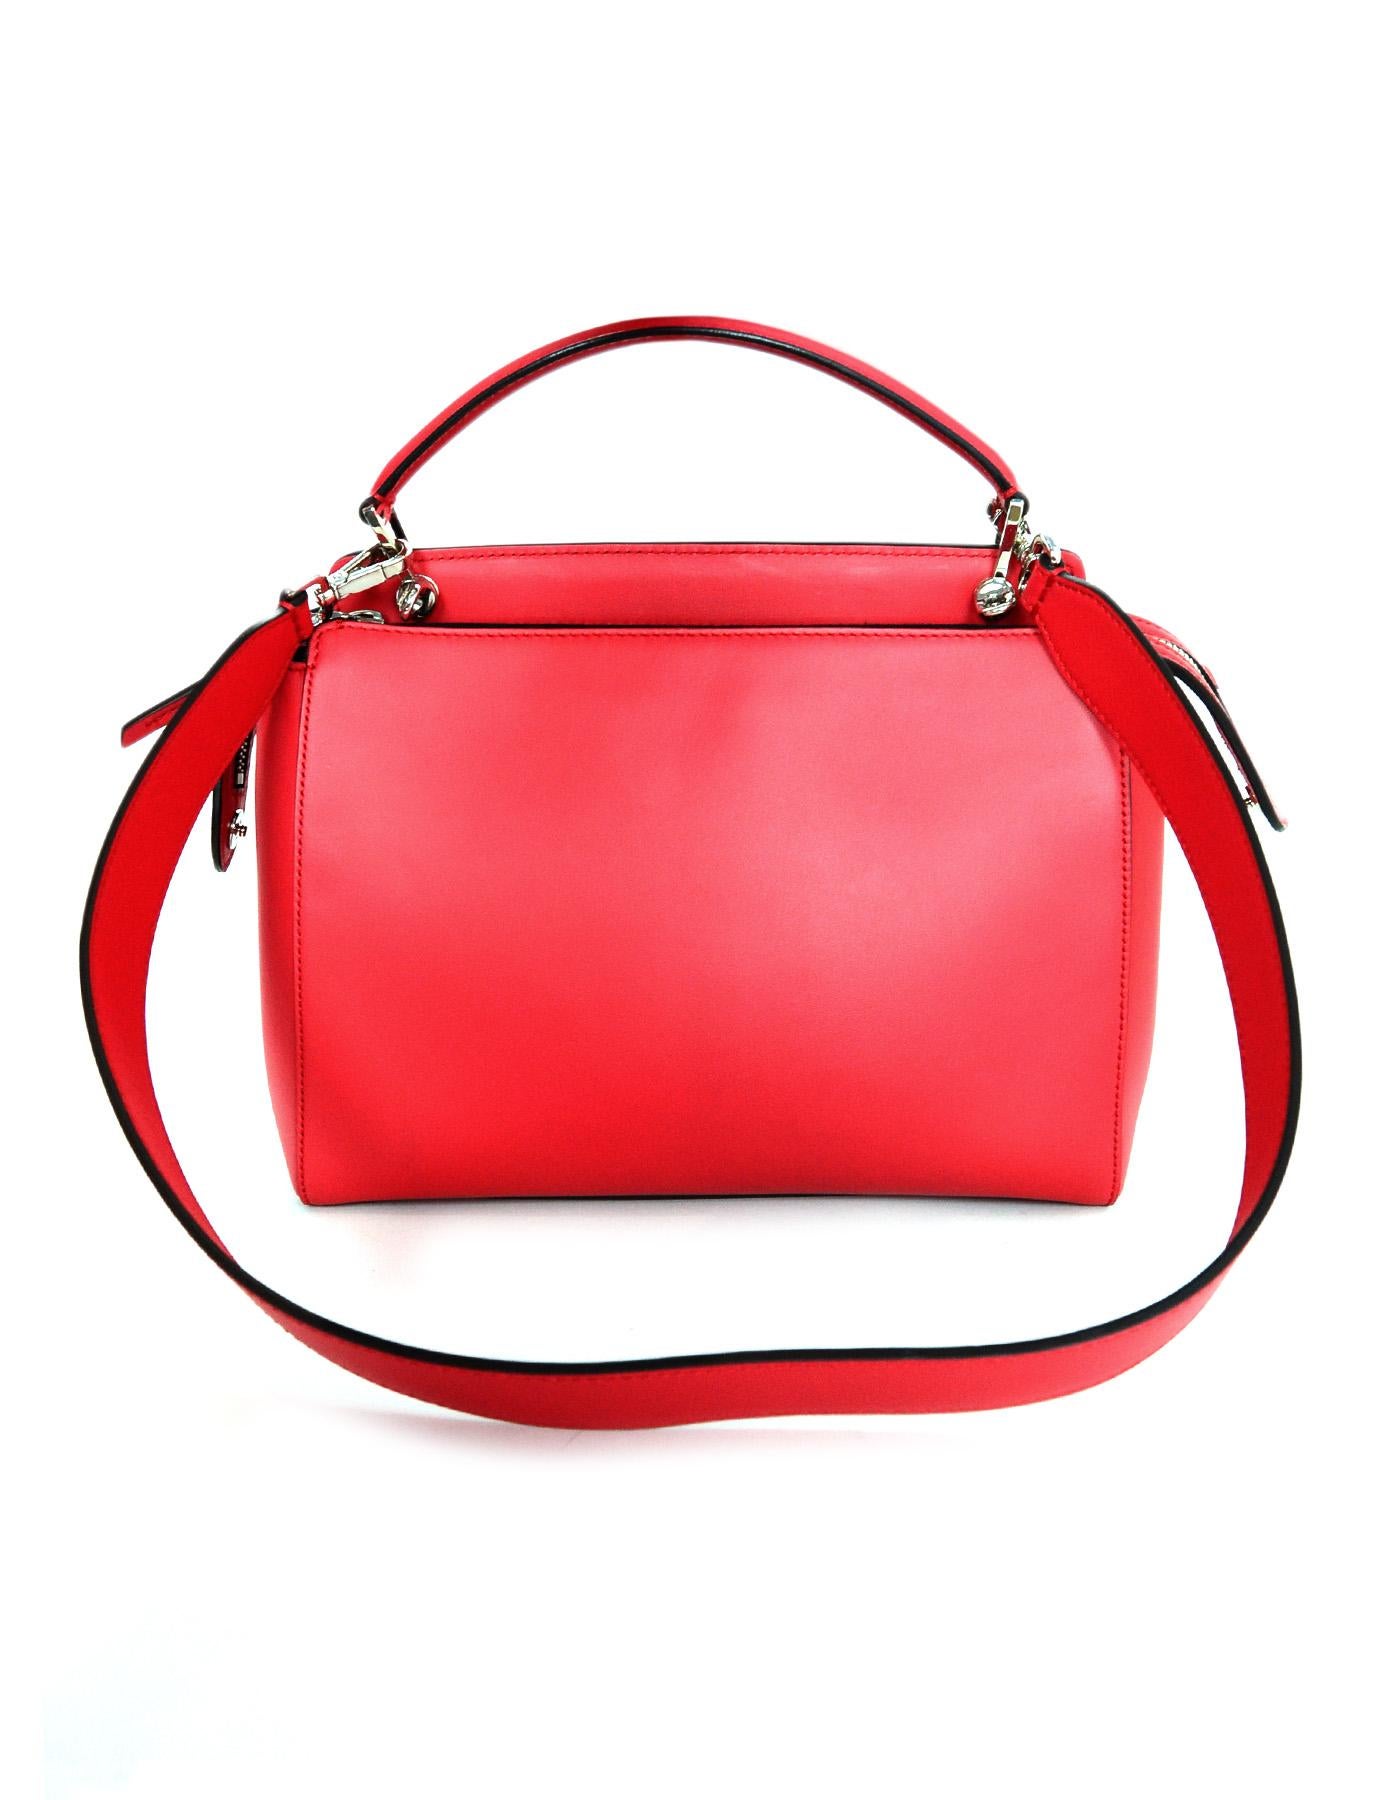 Fendi Red Nappa Leather Whipstitch Fashion Show Dotcom Satchel Bag w/ Strap 1